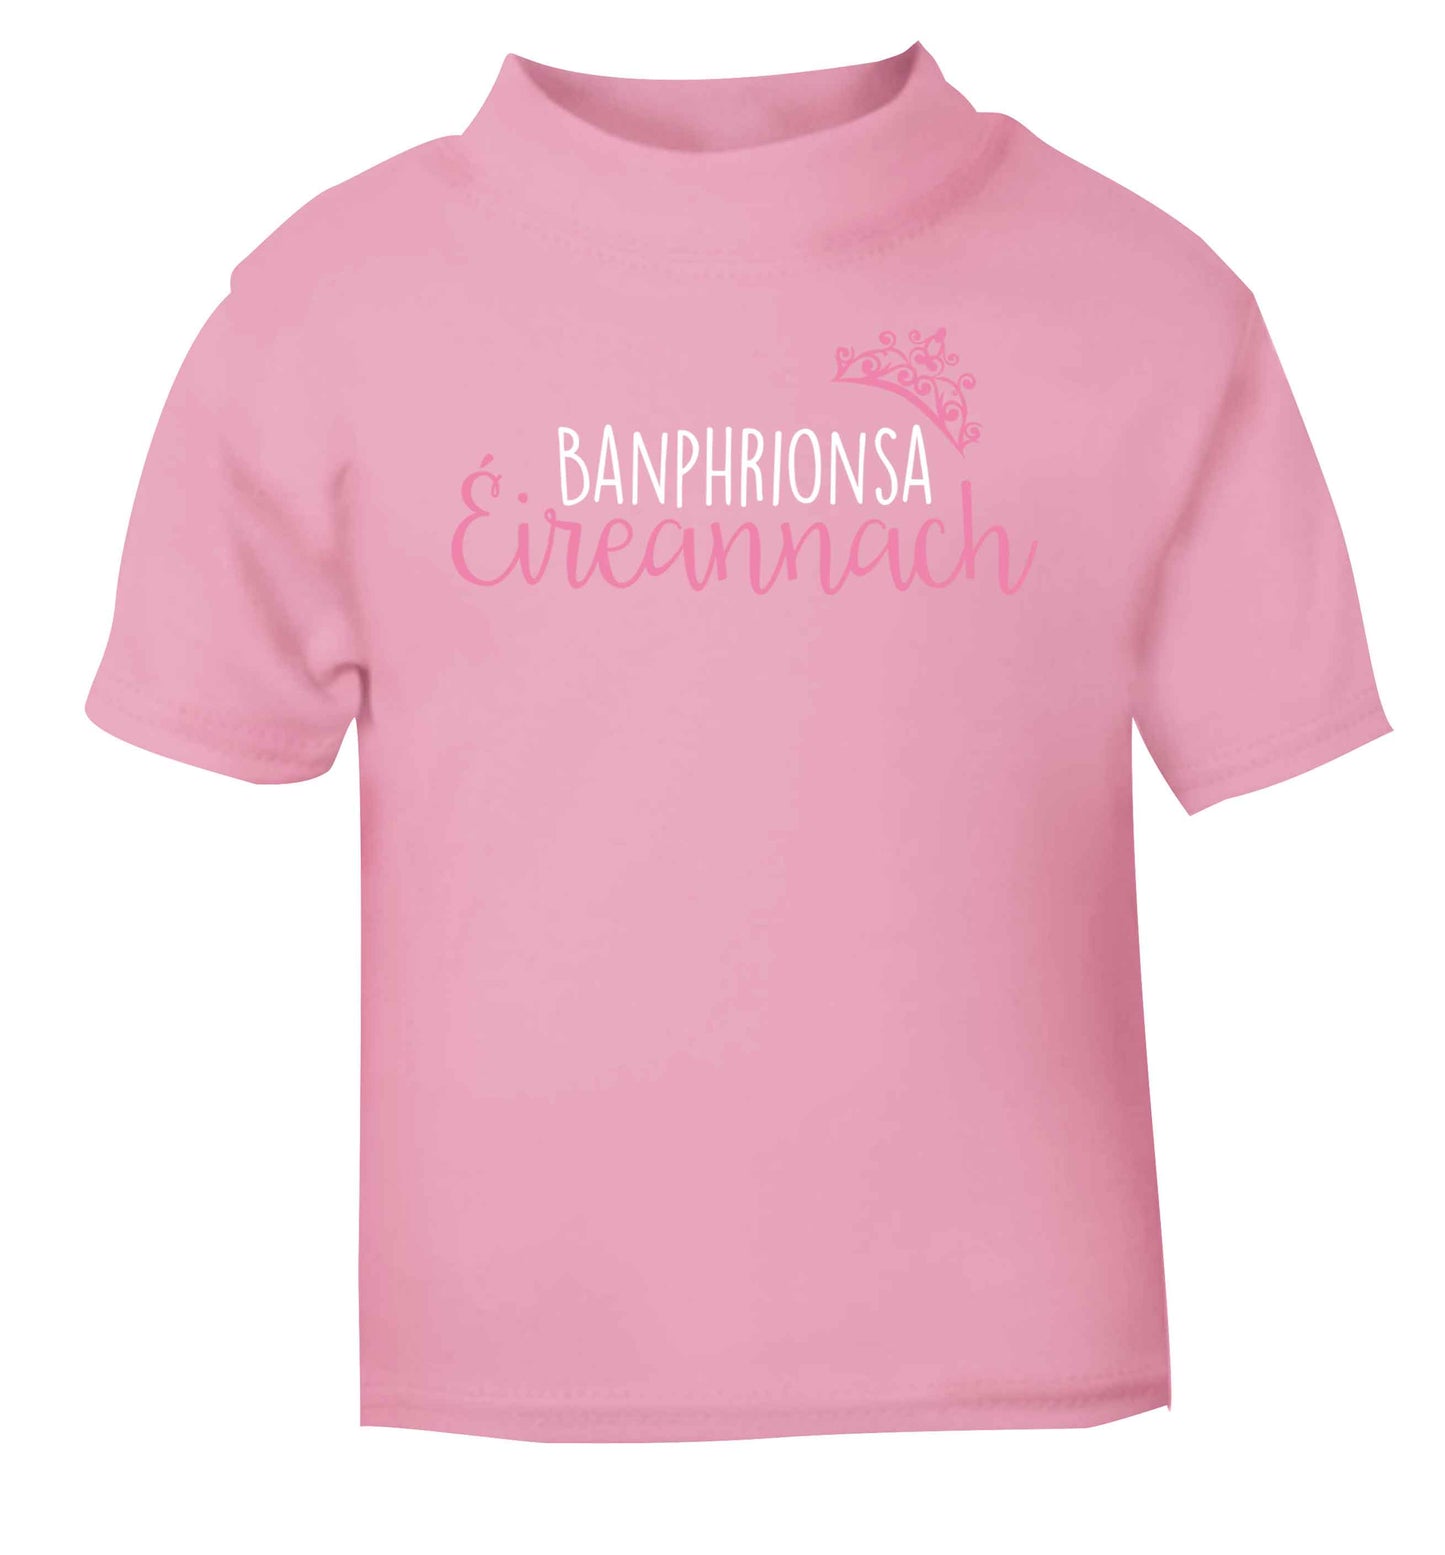 Banphrionsa eireannach light pink baby toddler Tshirt 2 Years